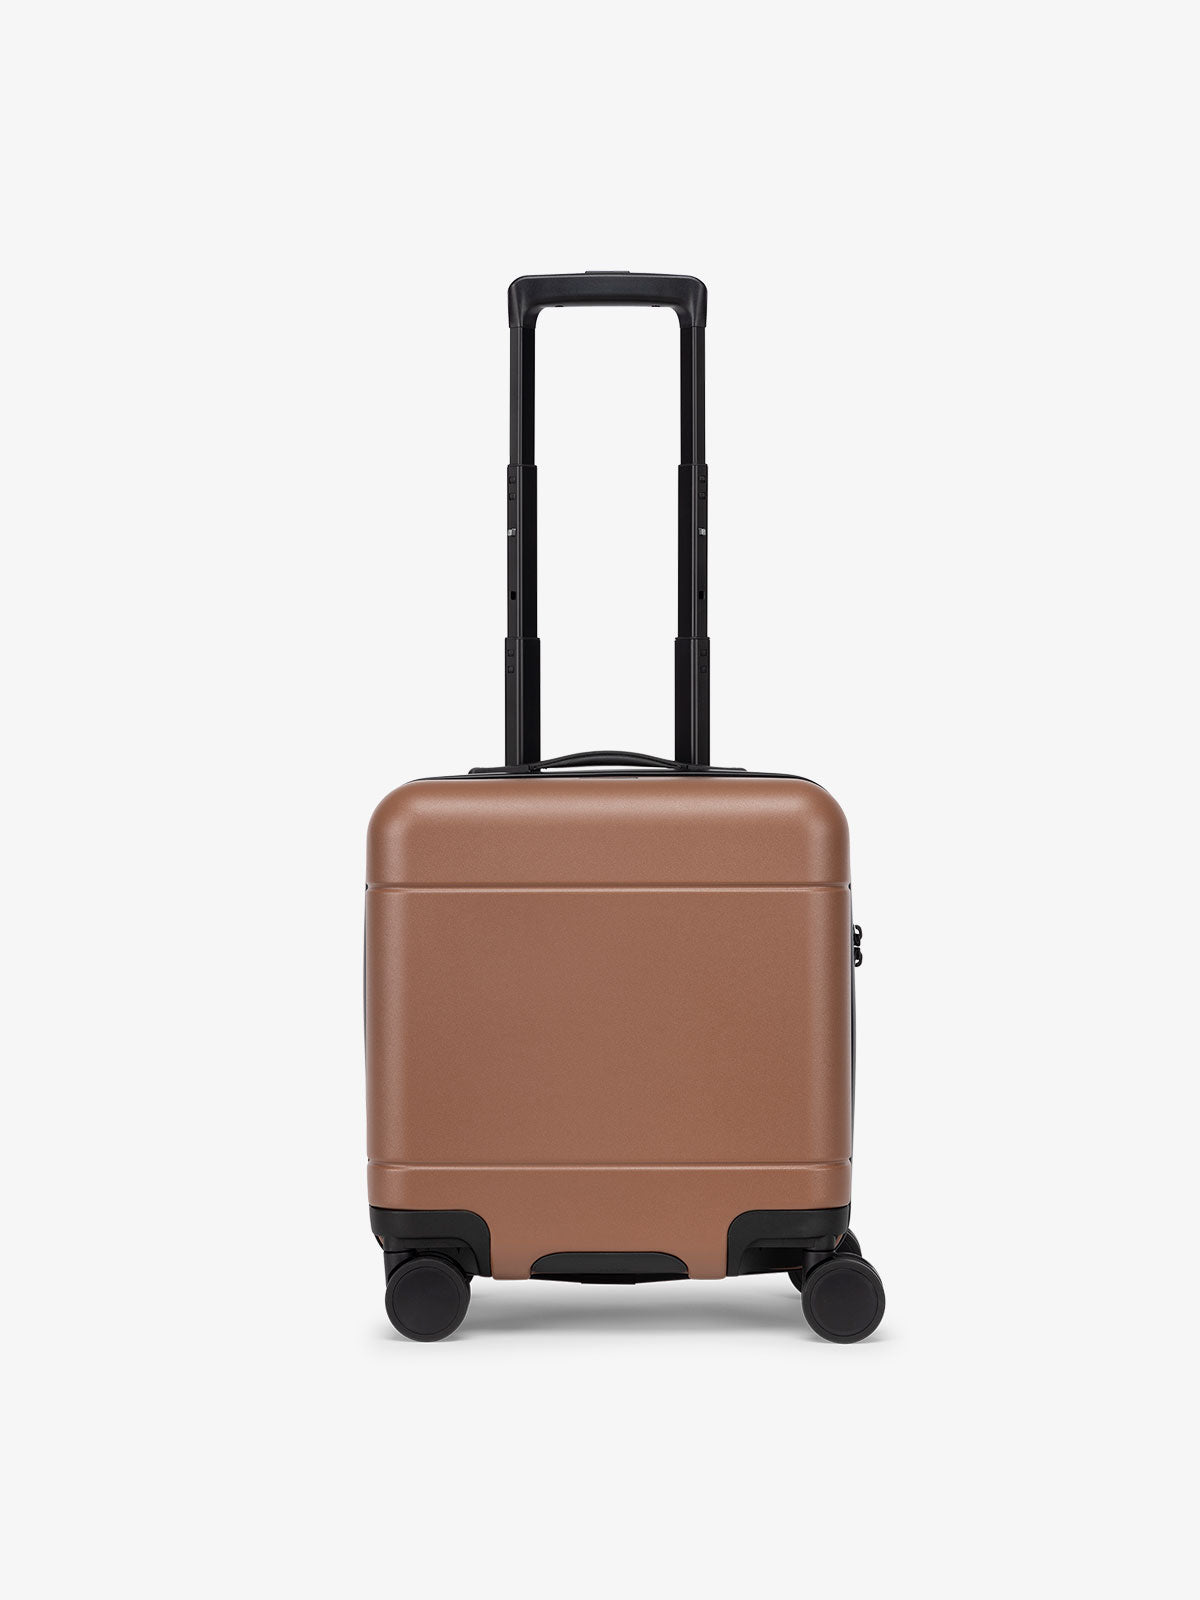 Hue mini carry on luggage in hazel brown